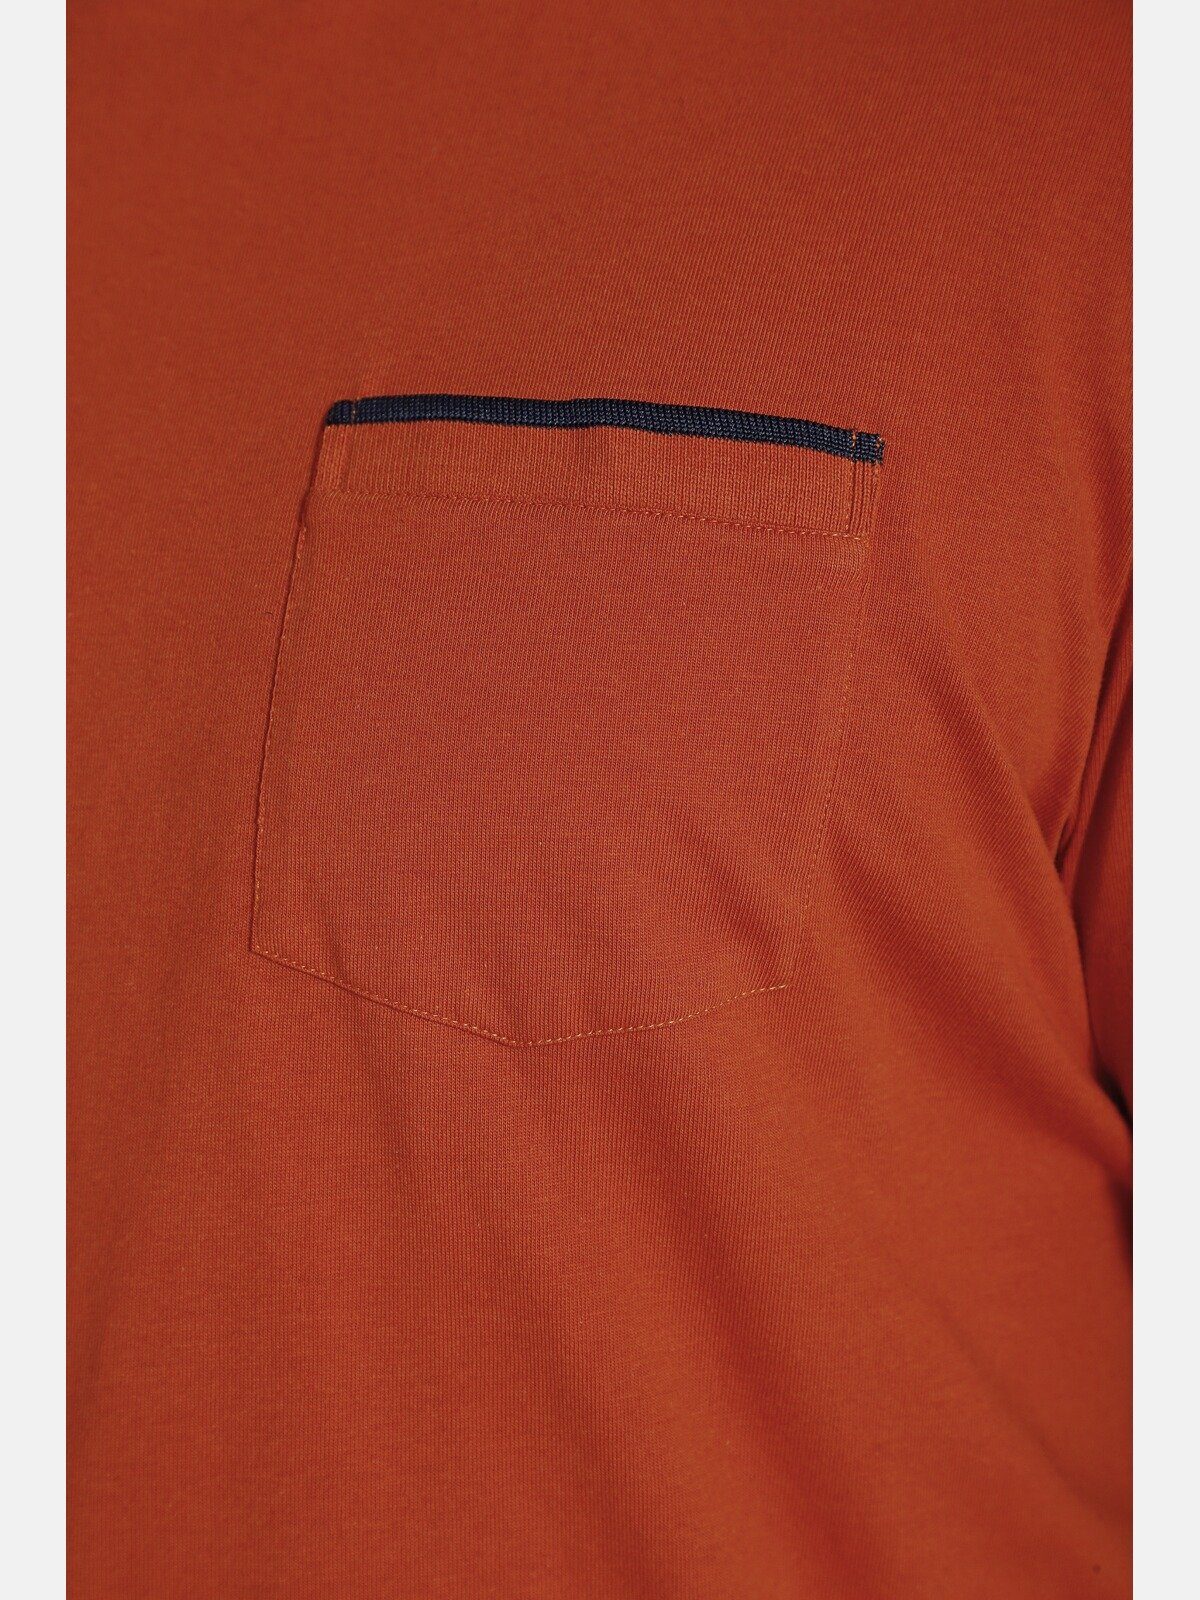 +Fit EARL Charles Colby mit T-Shirt PATON Brusttasche orange Artikel,